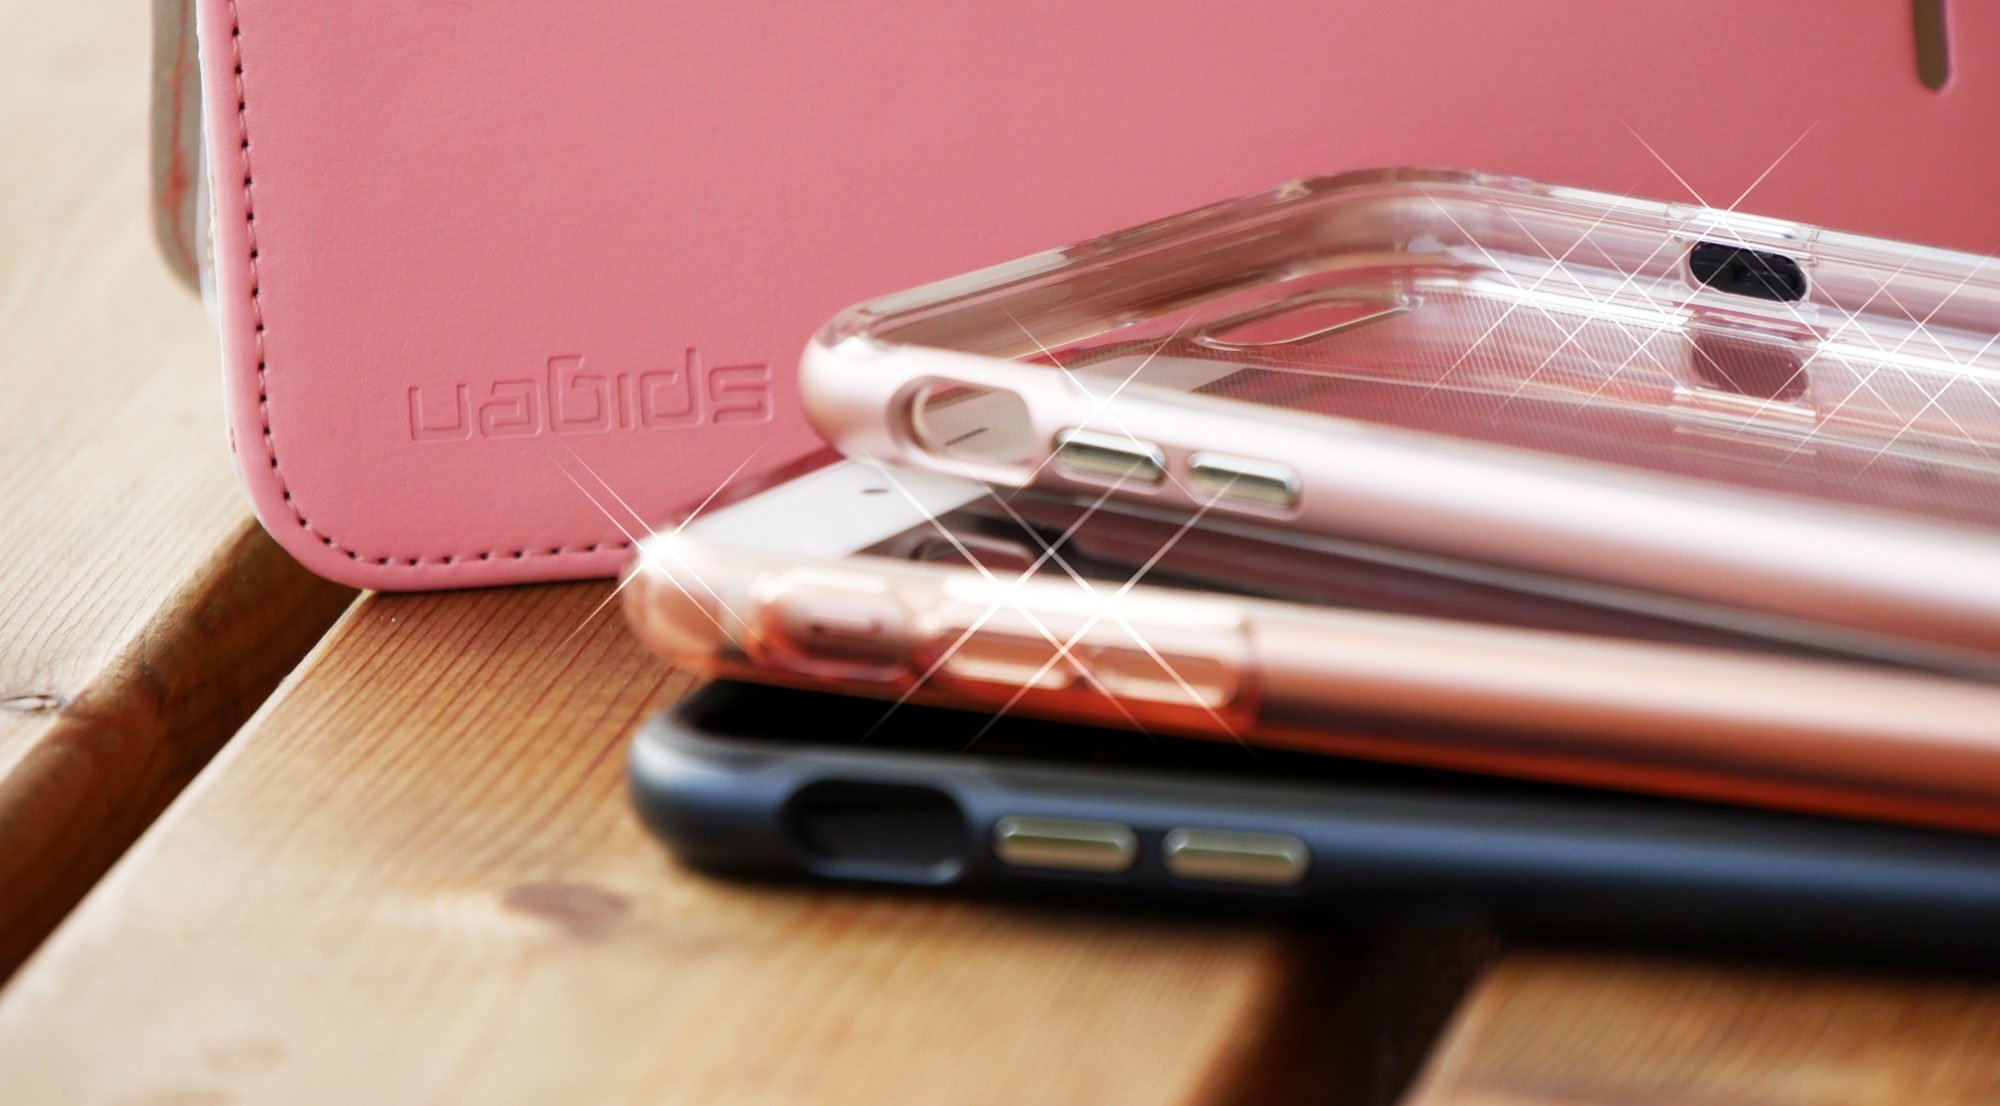 iPhone 6s Hüllen-Test: die besten Cases & Schutzhüllen fürs iPhone 6s & iPhone 6s Plus 2